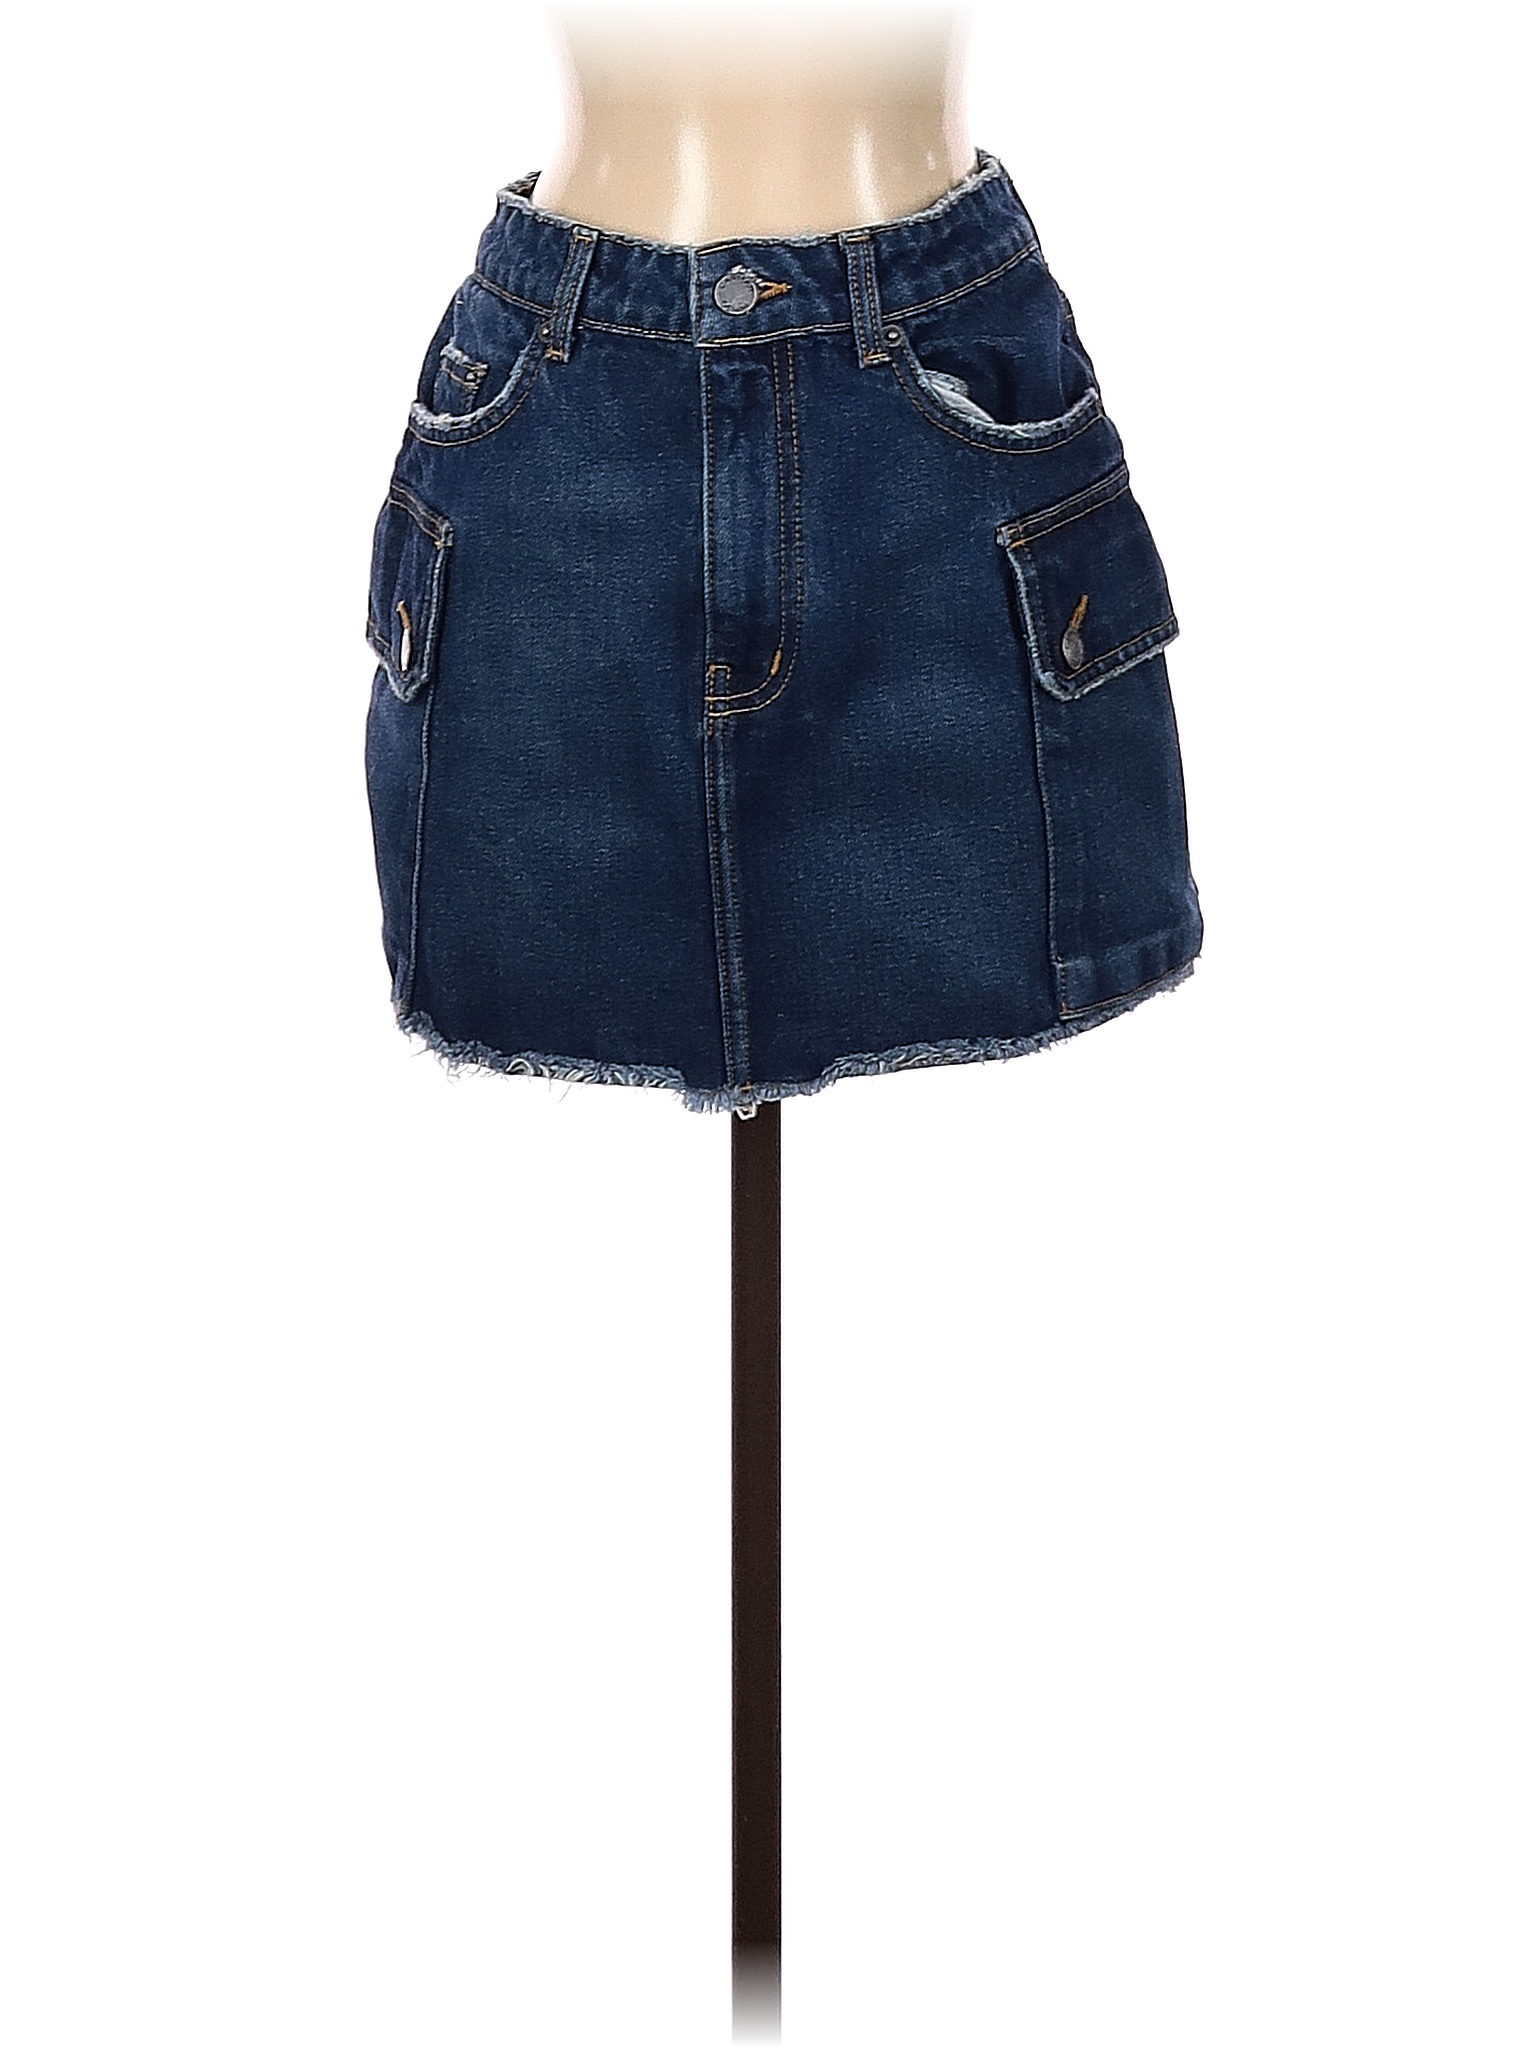 Carmar 100% Cotton Solid Blue Denim Skirt 27 Waist - 84% off | thredUP